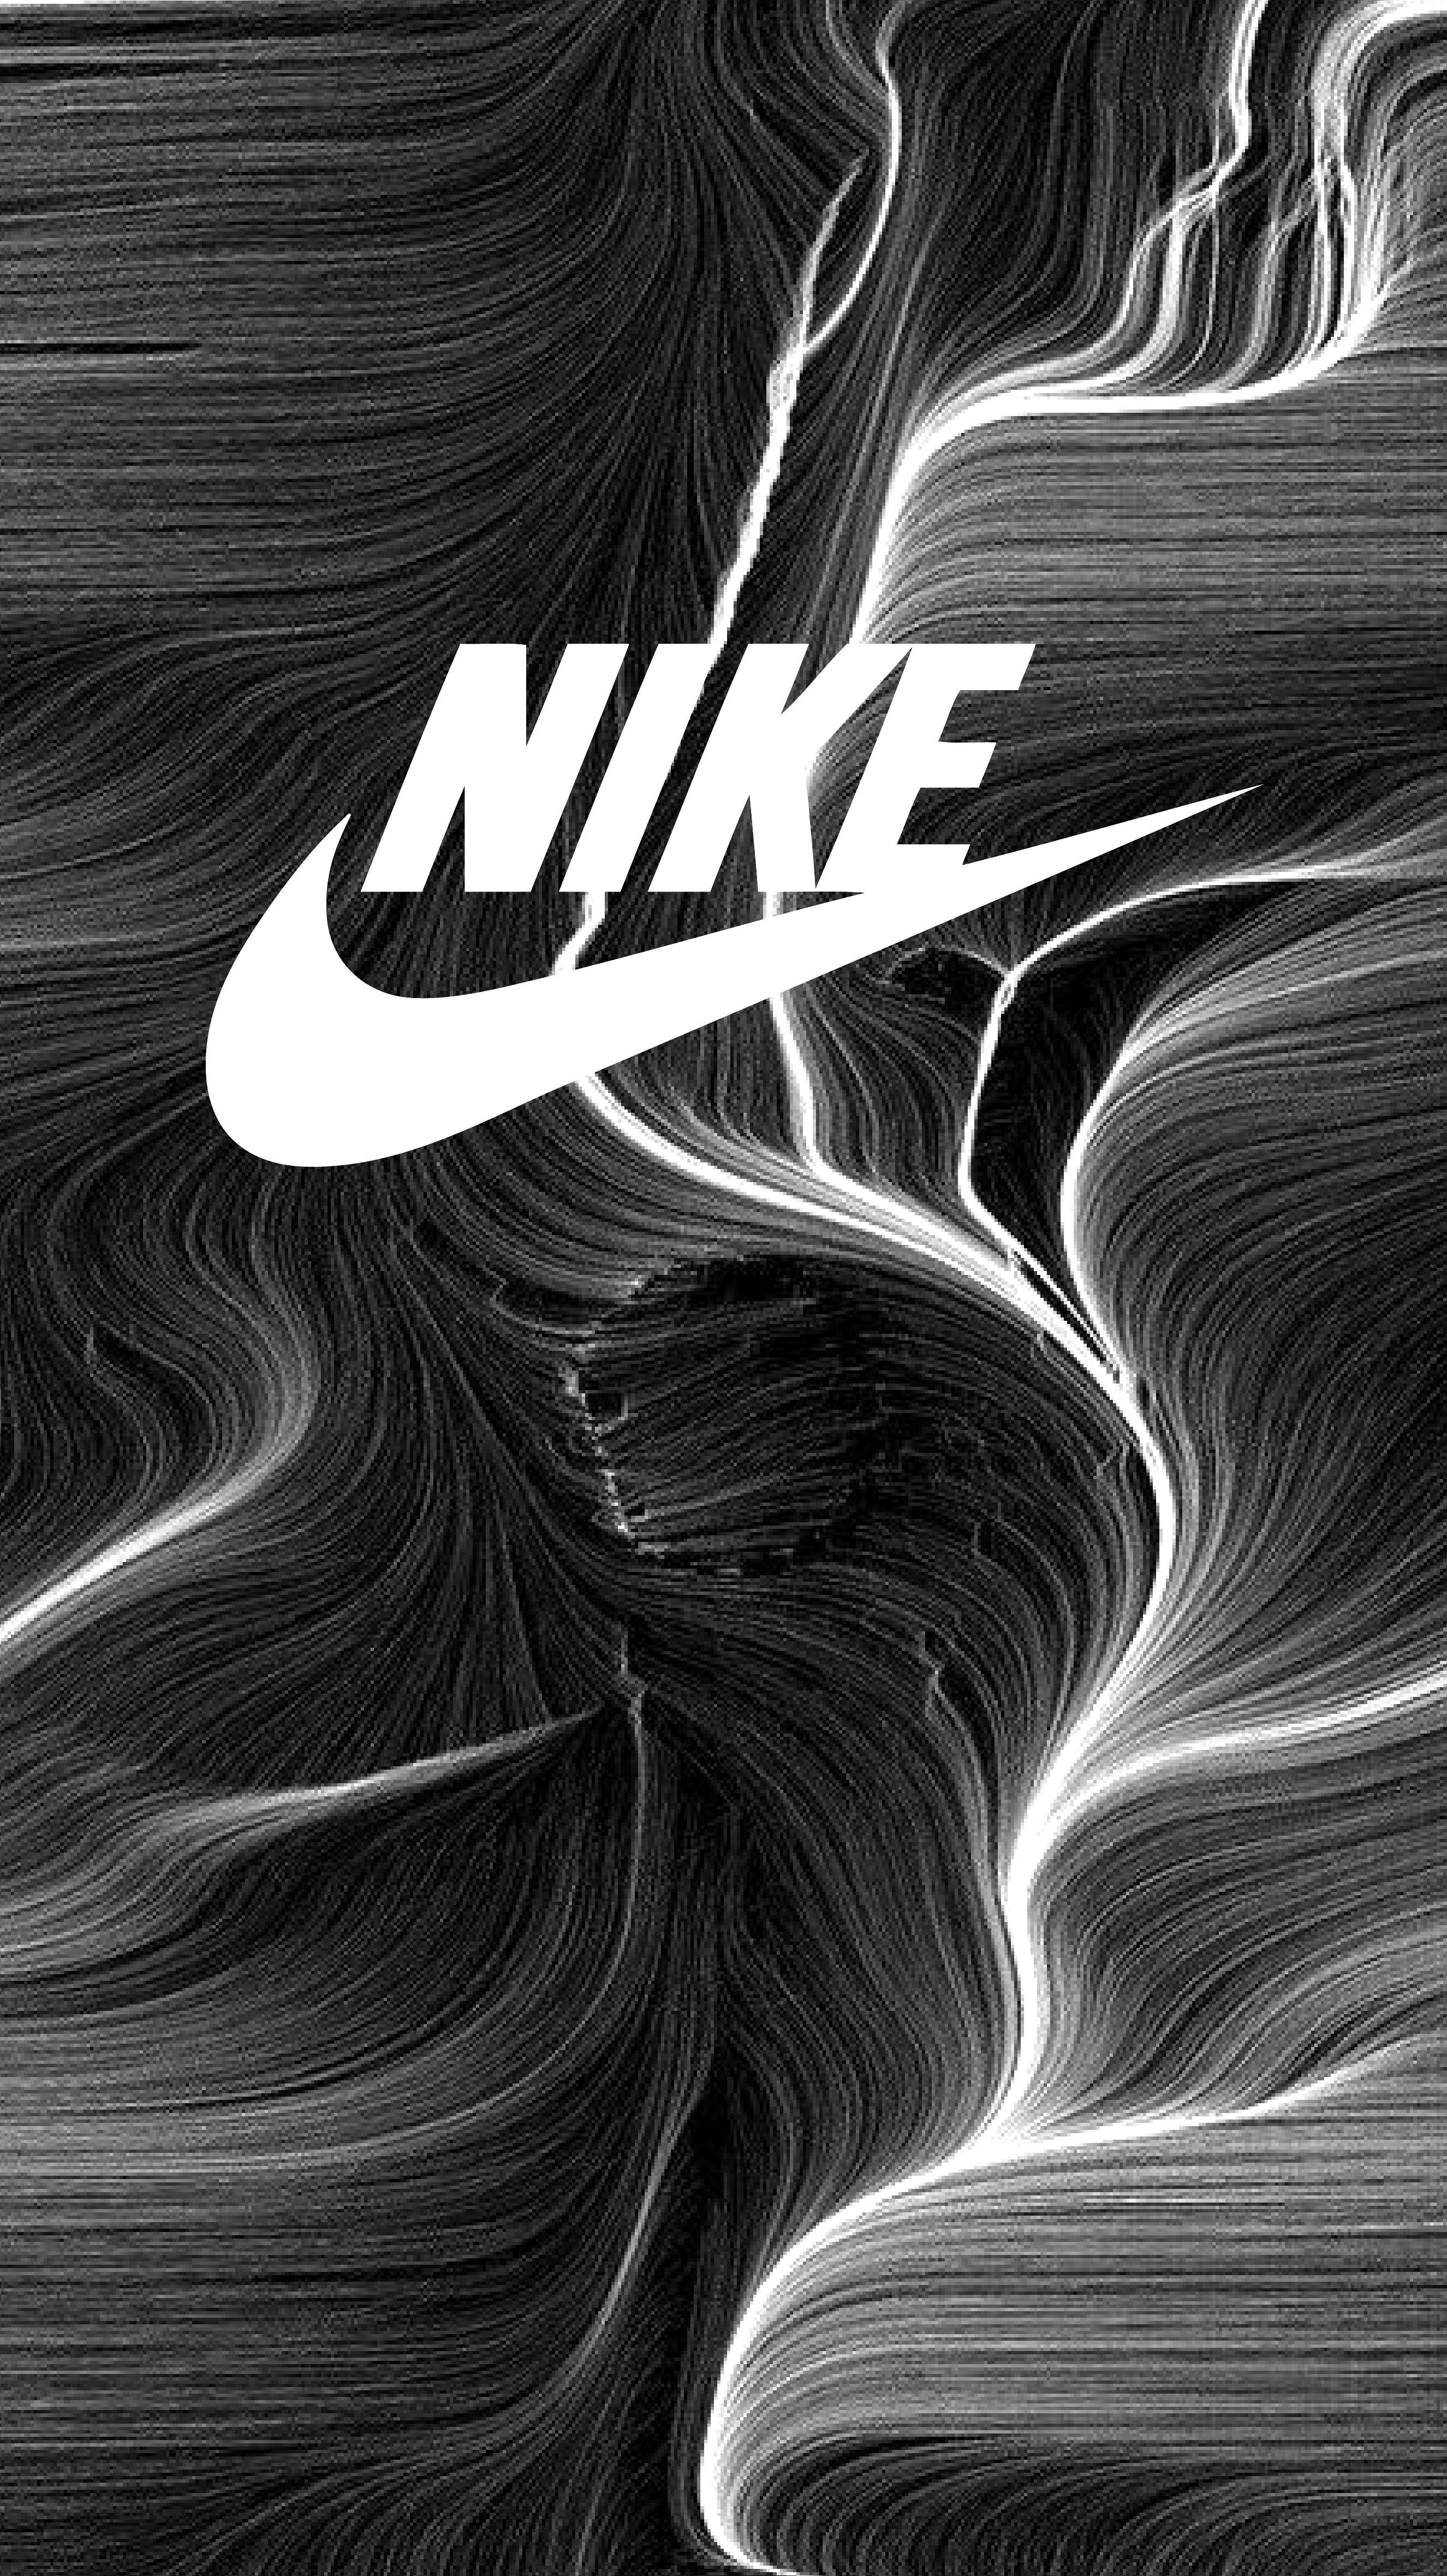  Nike Hintergrundbild 2651x4718. NIKE WALLPAPER 8. Nike tapete, Schwarze nike, Handy hintergrund hd